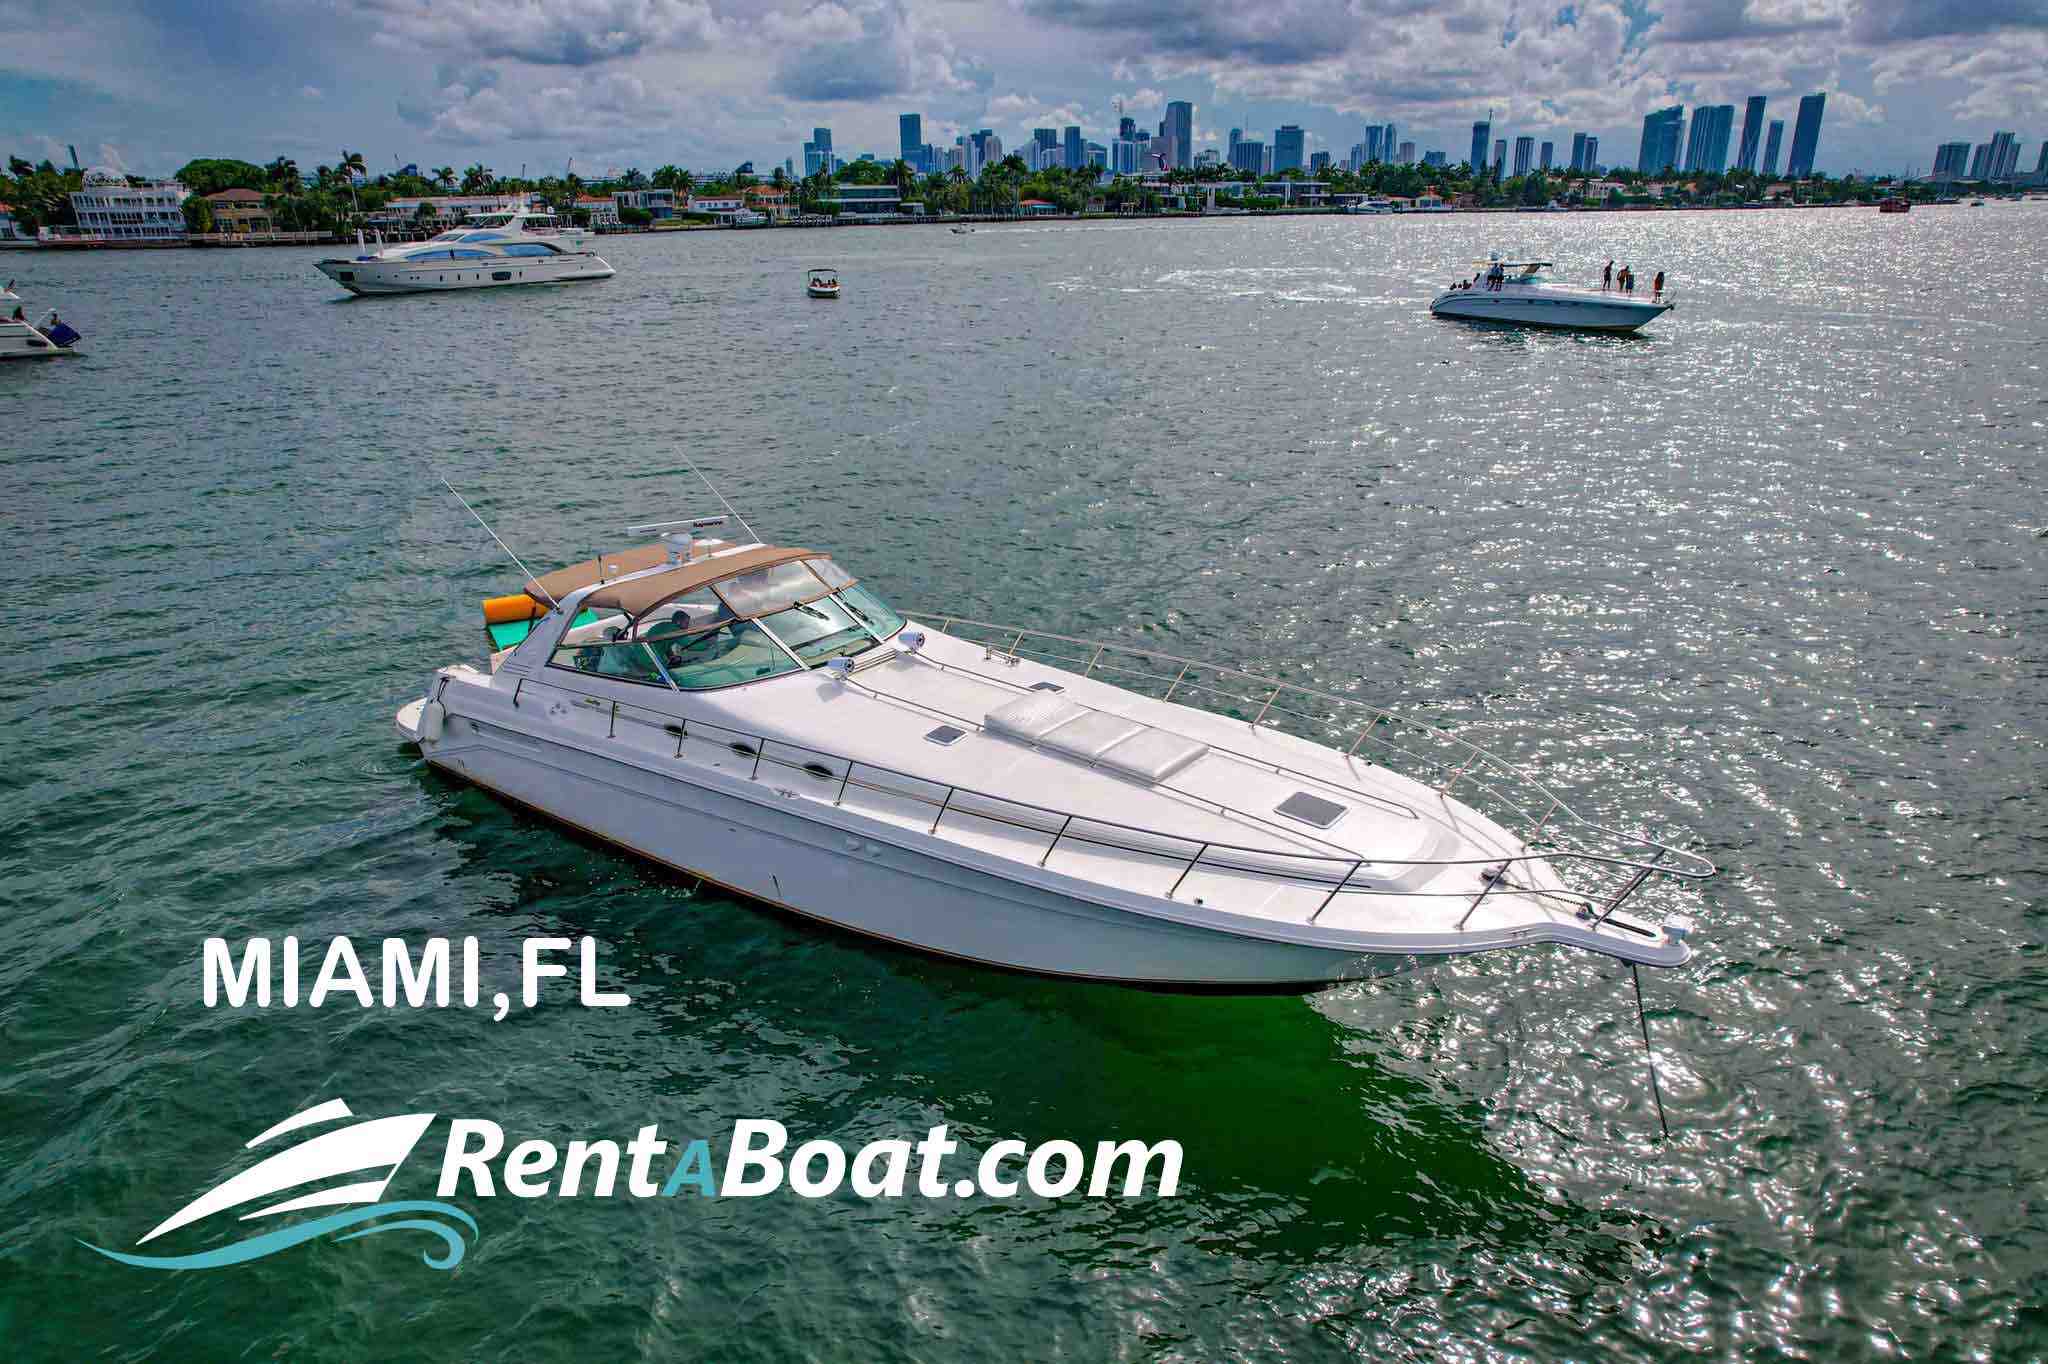  boat rentals Florida MIAMI Florida  Sea Ray 540 Sundancer 2000 55 